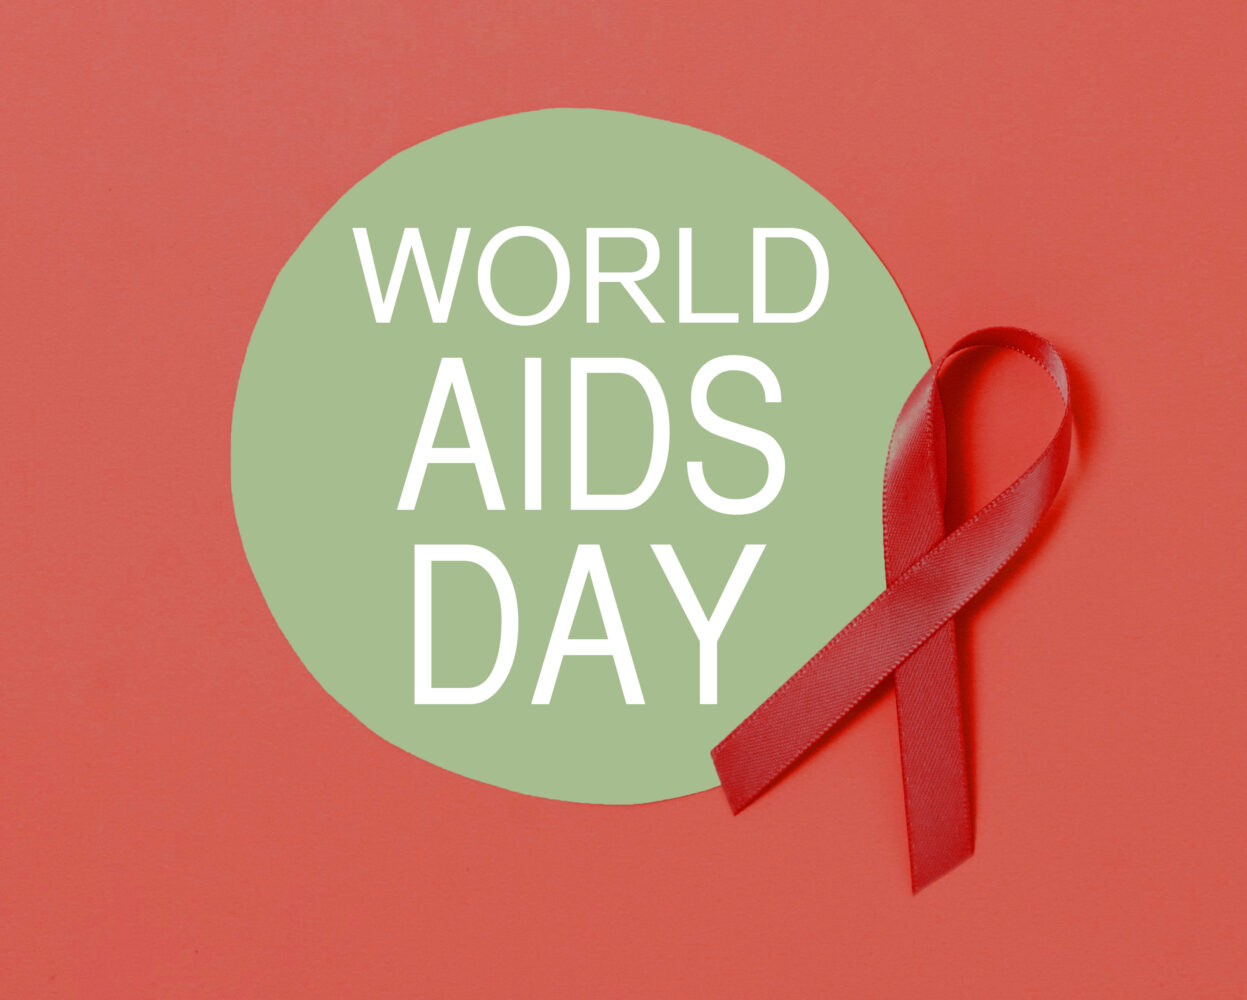 Photo by Tara Winstead ("World Aids Day")